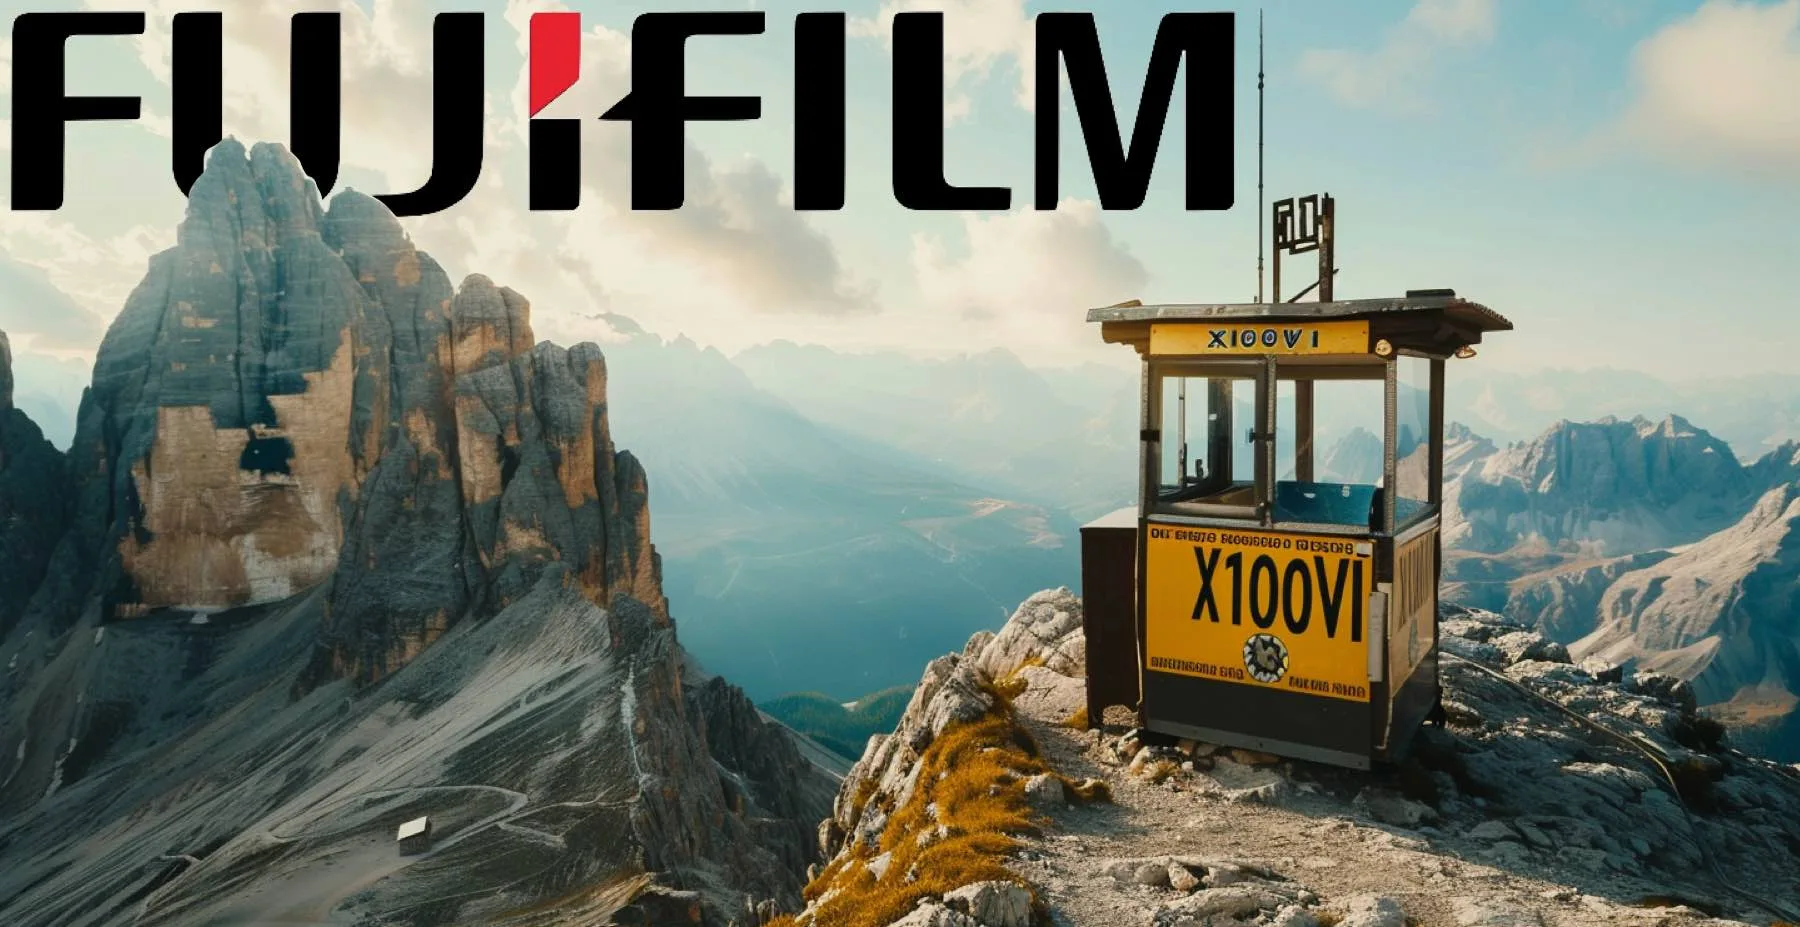 Fujifilm X100VI Pop Up Shop.jpg